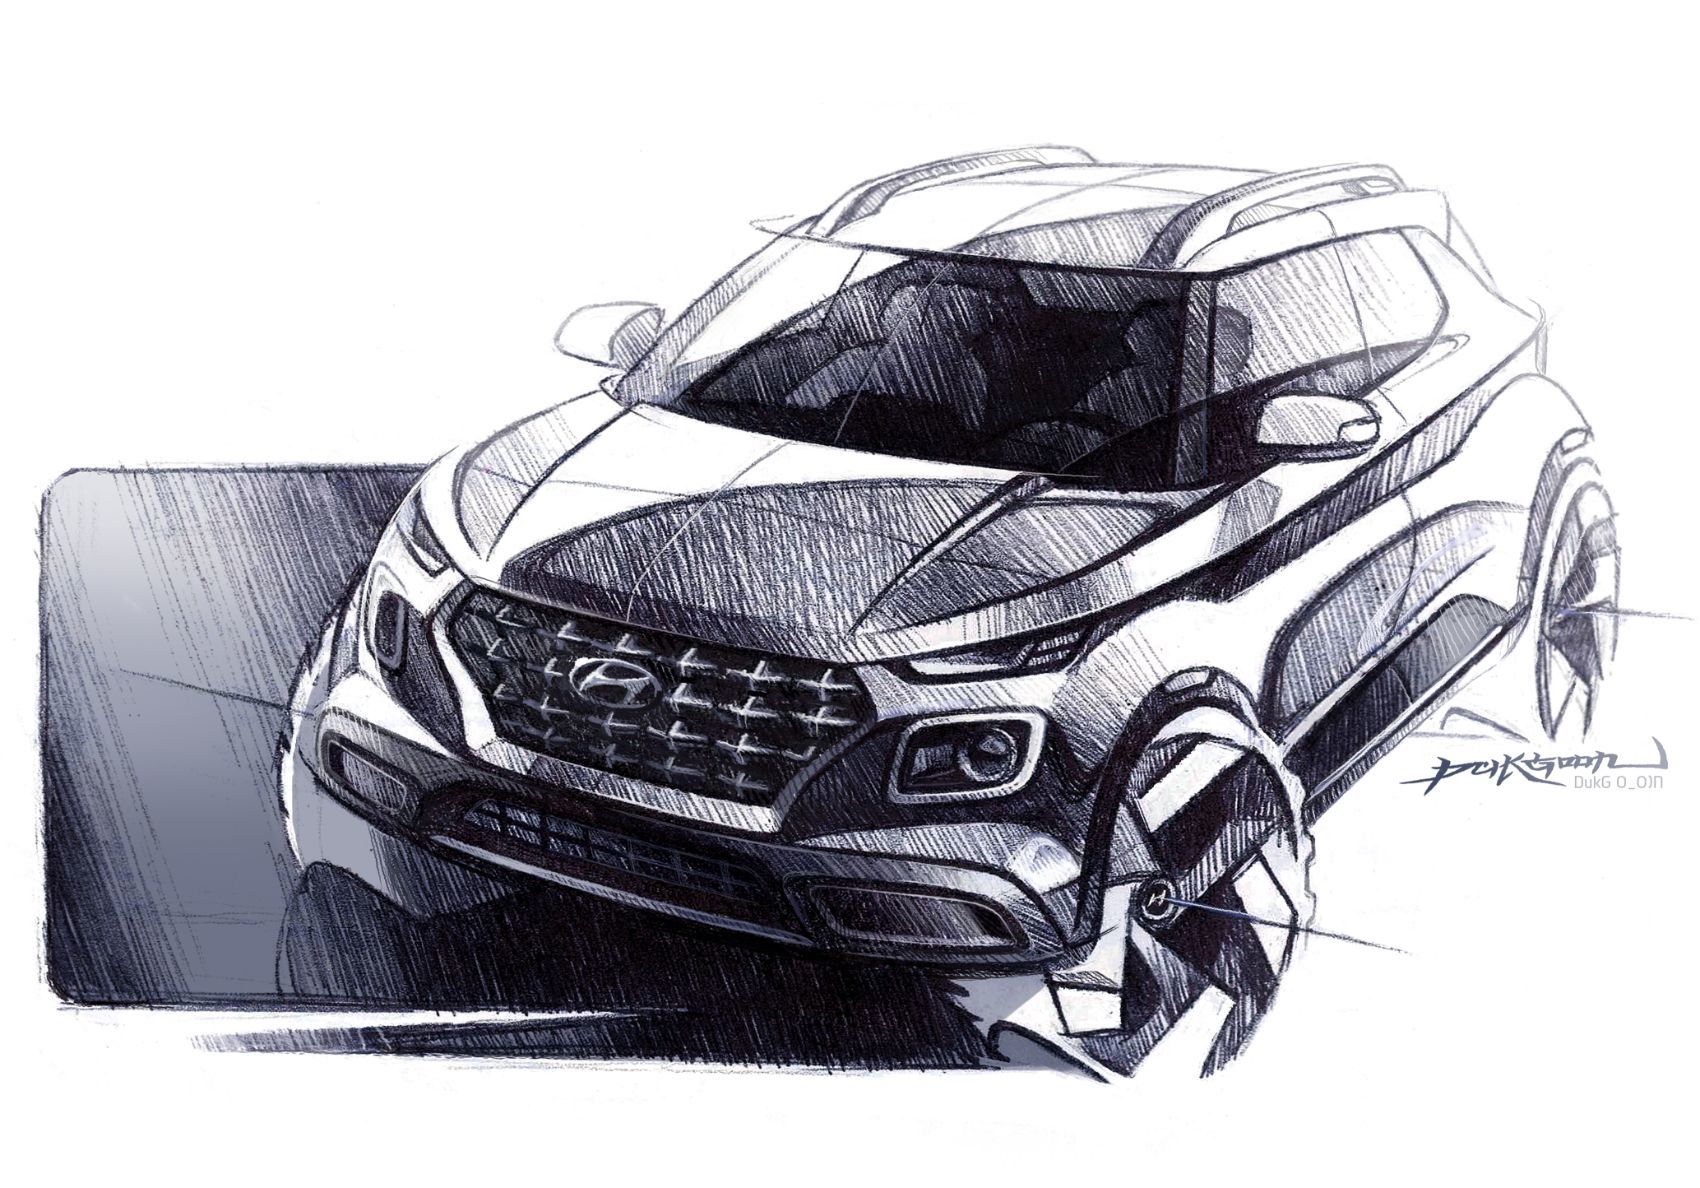 2020 Hyundai Venue design sketch.